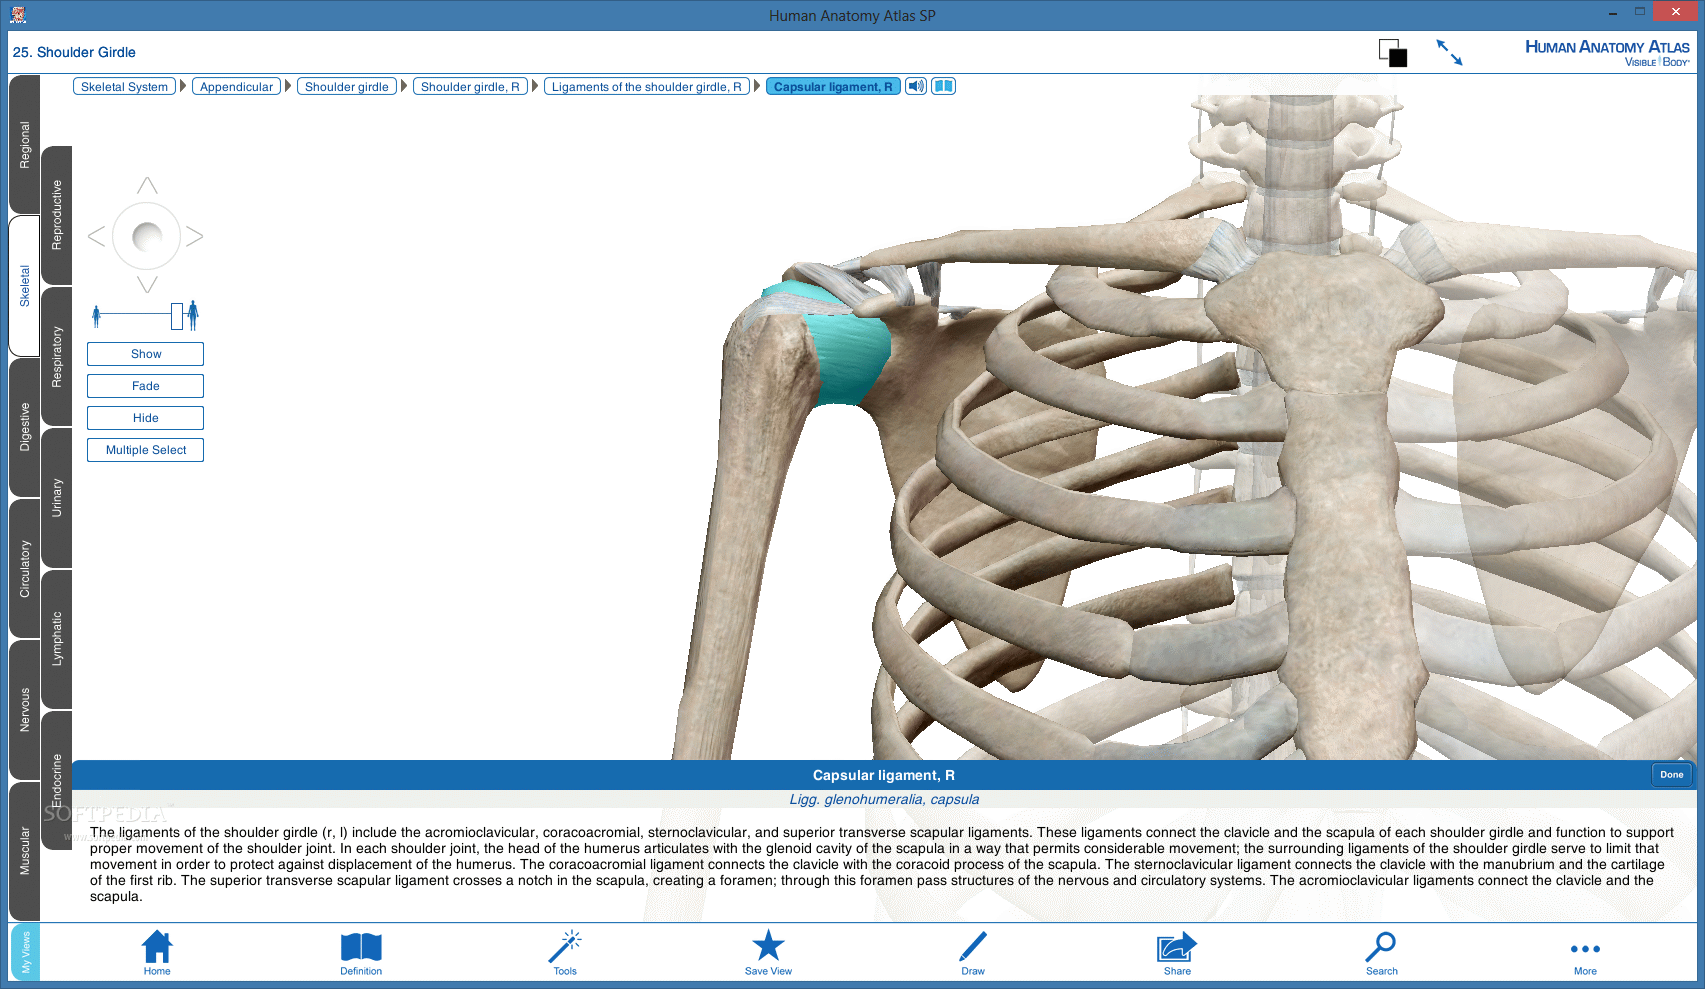 Download Human Anatomy Atlas SP 2018.3